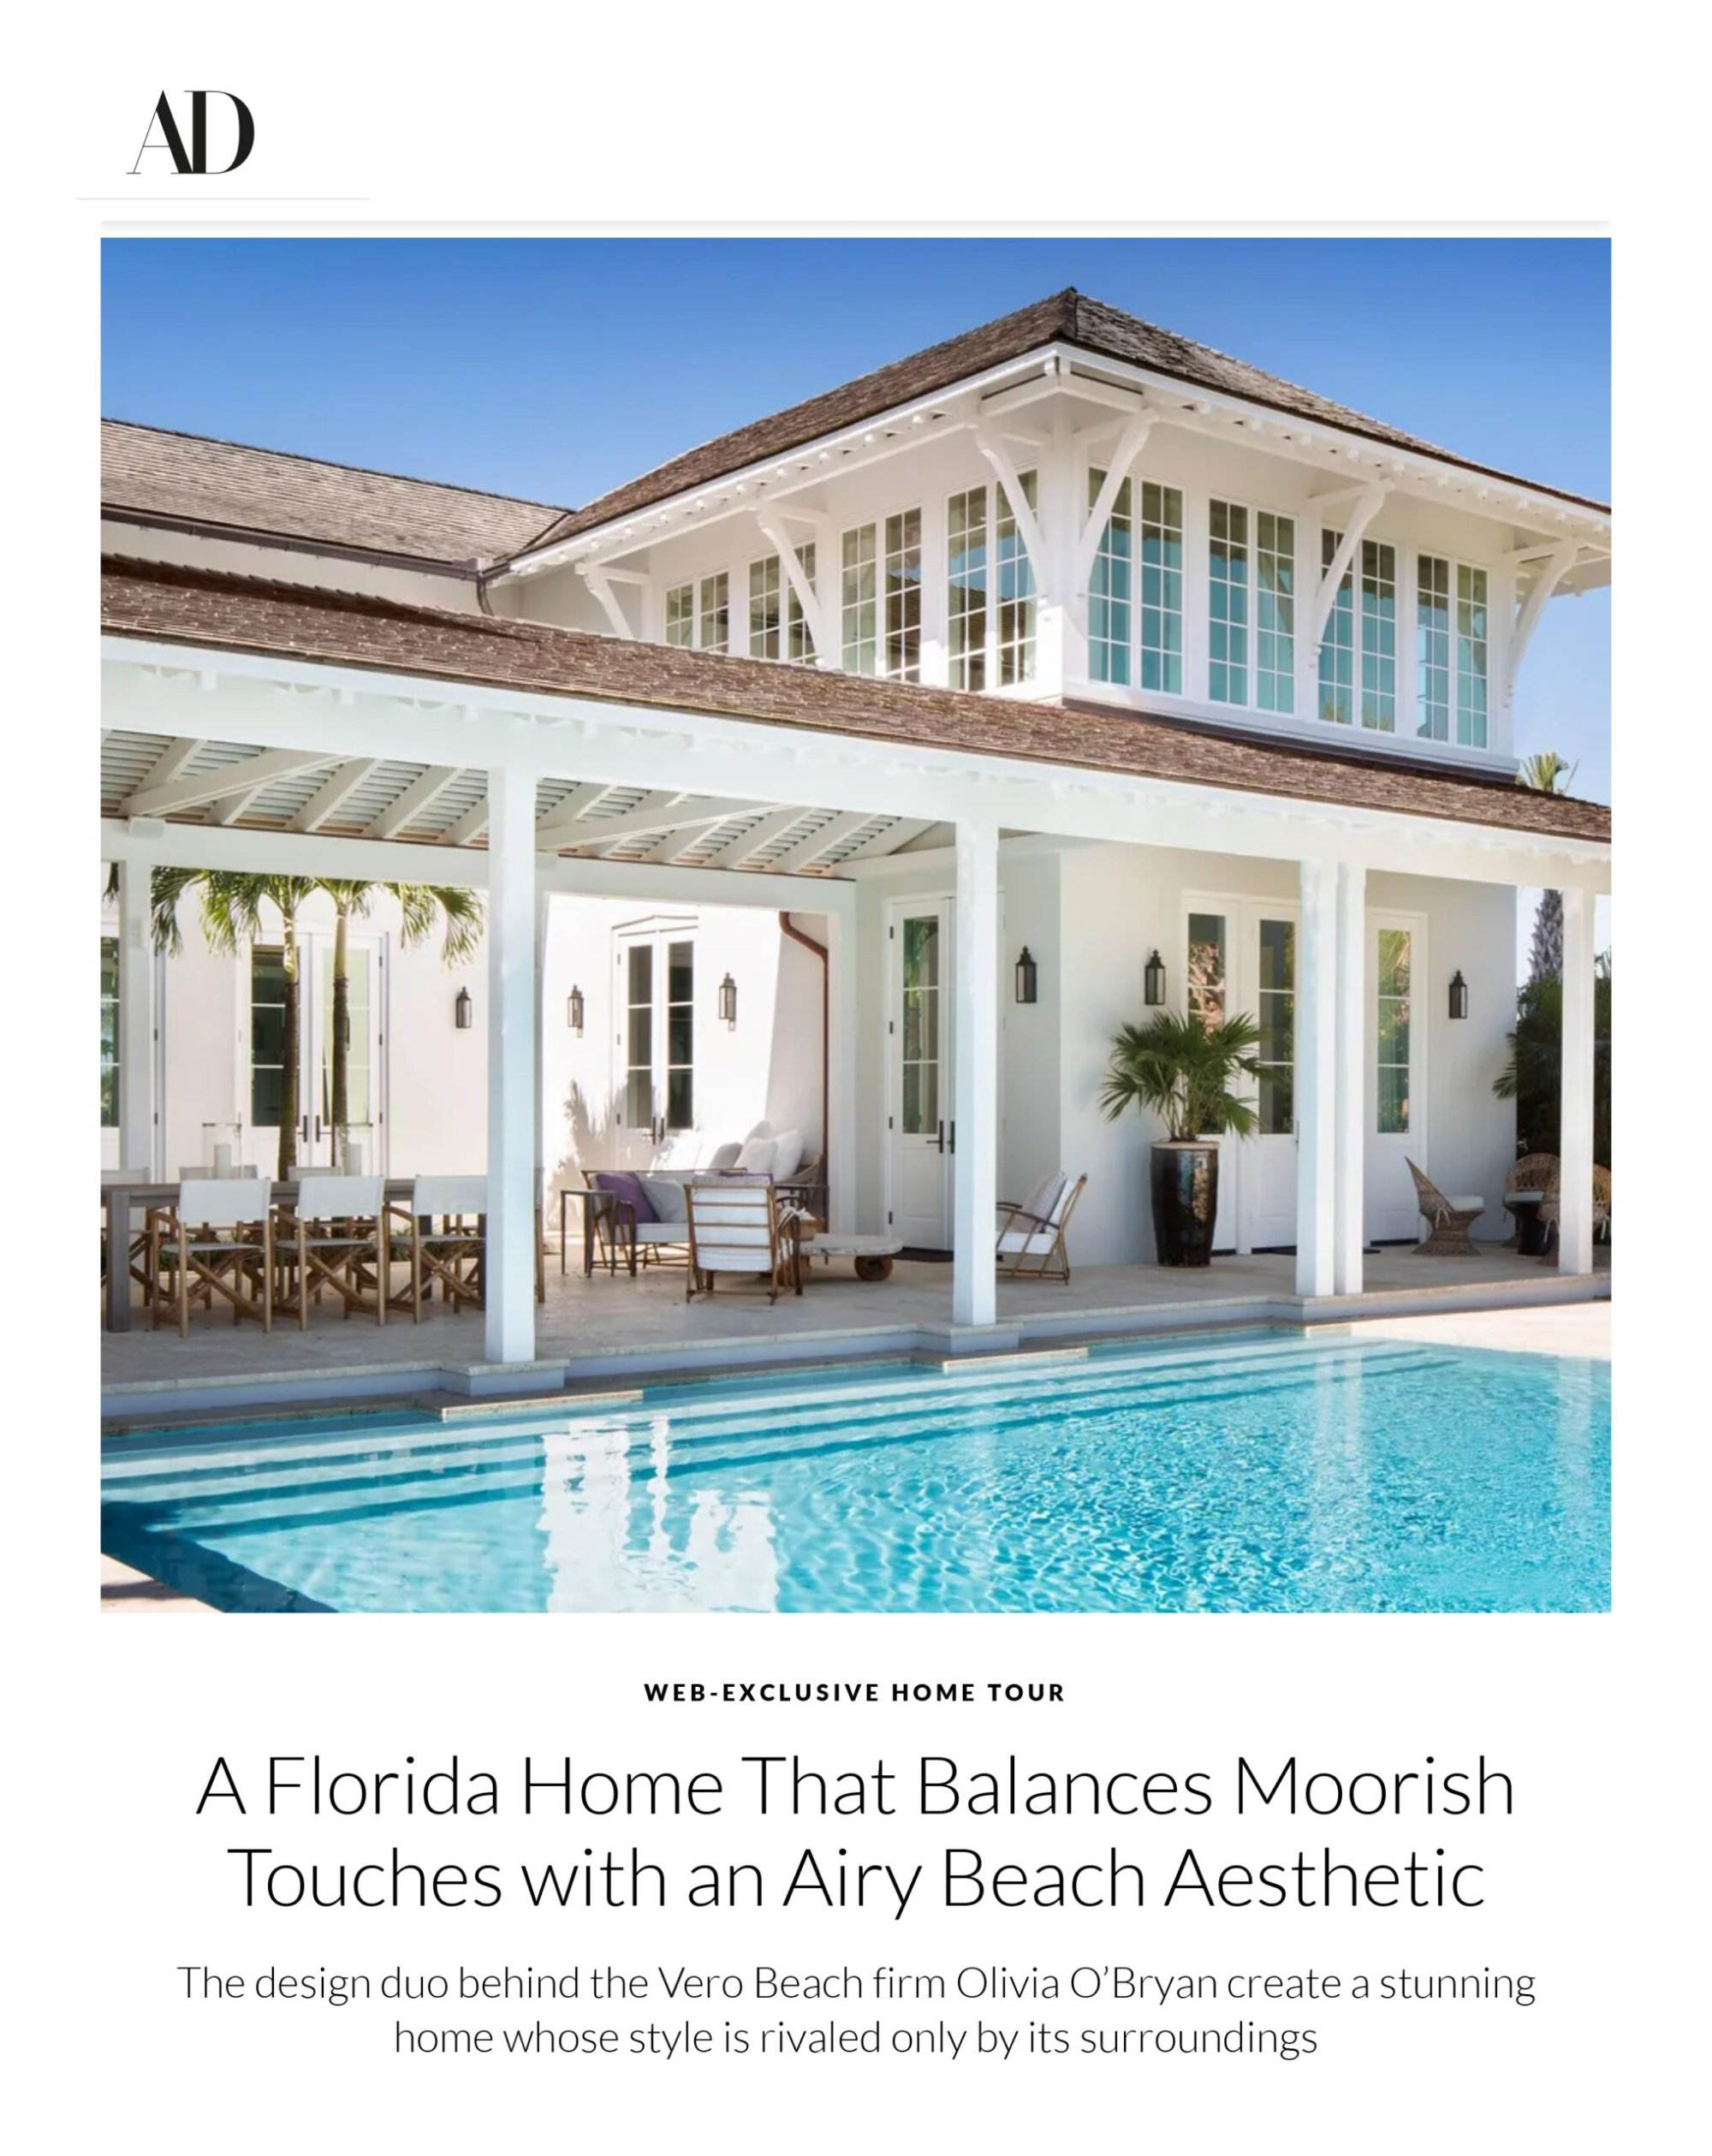 A Florida Home that Balances Moorish Touches with an Airy Beach Aesthetic Architectural Digest, Olivia O'bryan Interiors, Vero Beach, Florida